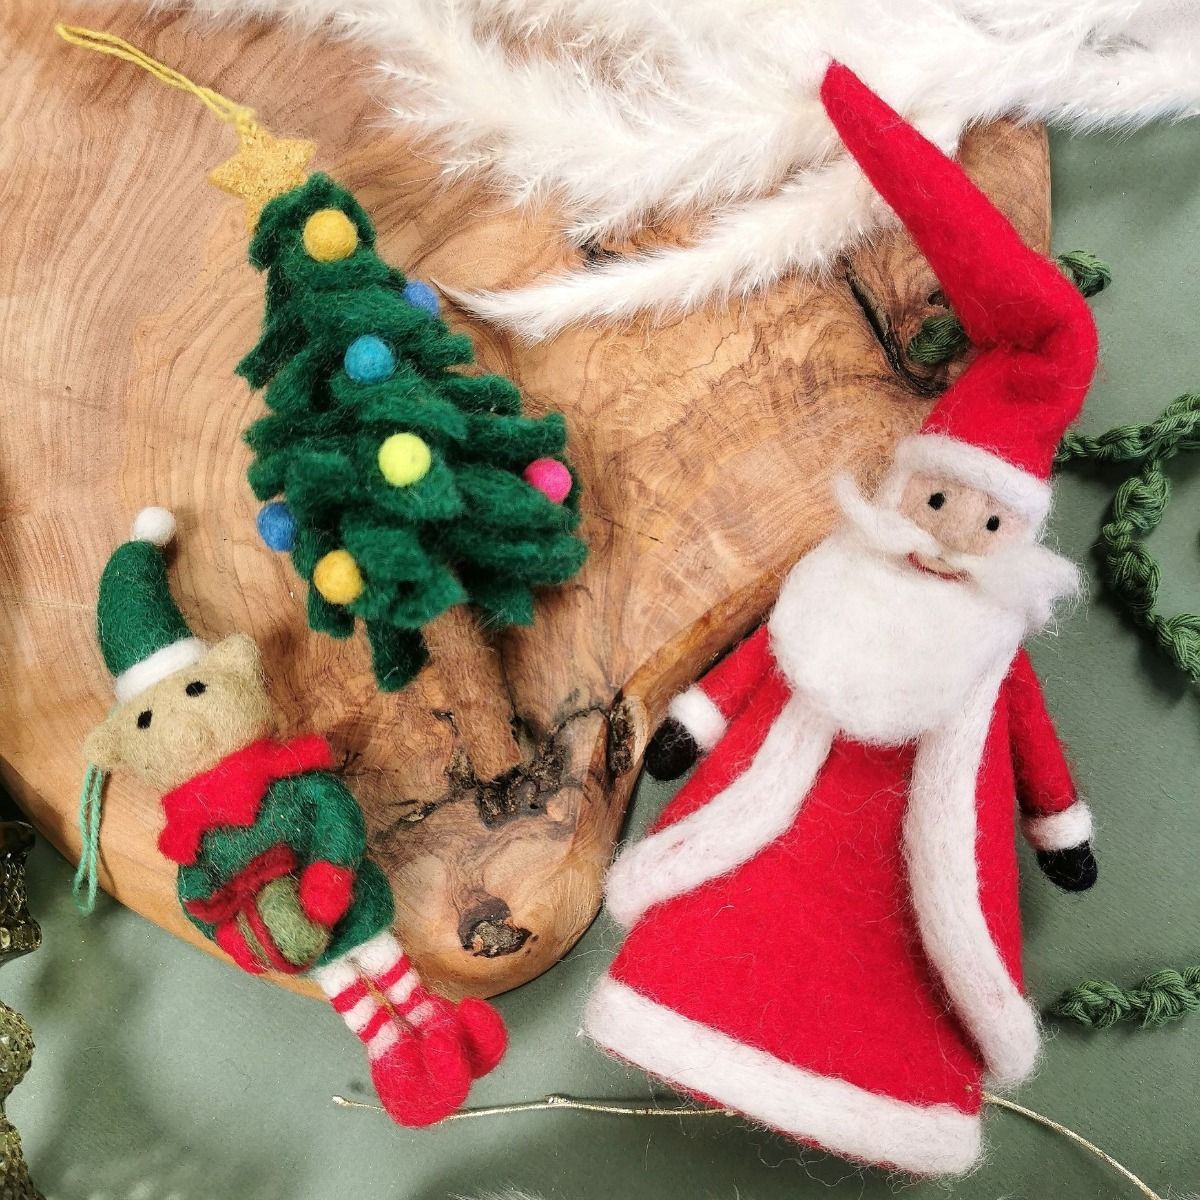 Handmade Felt Decoration - Cheeky Christmas Elf